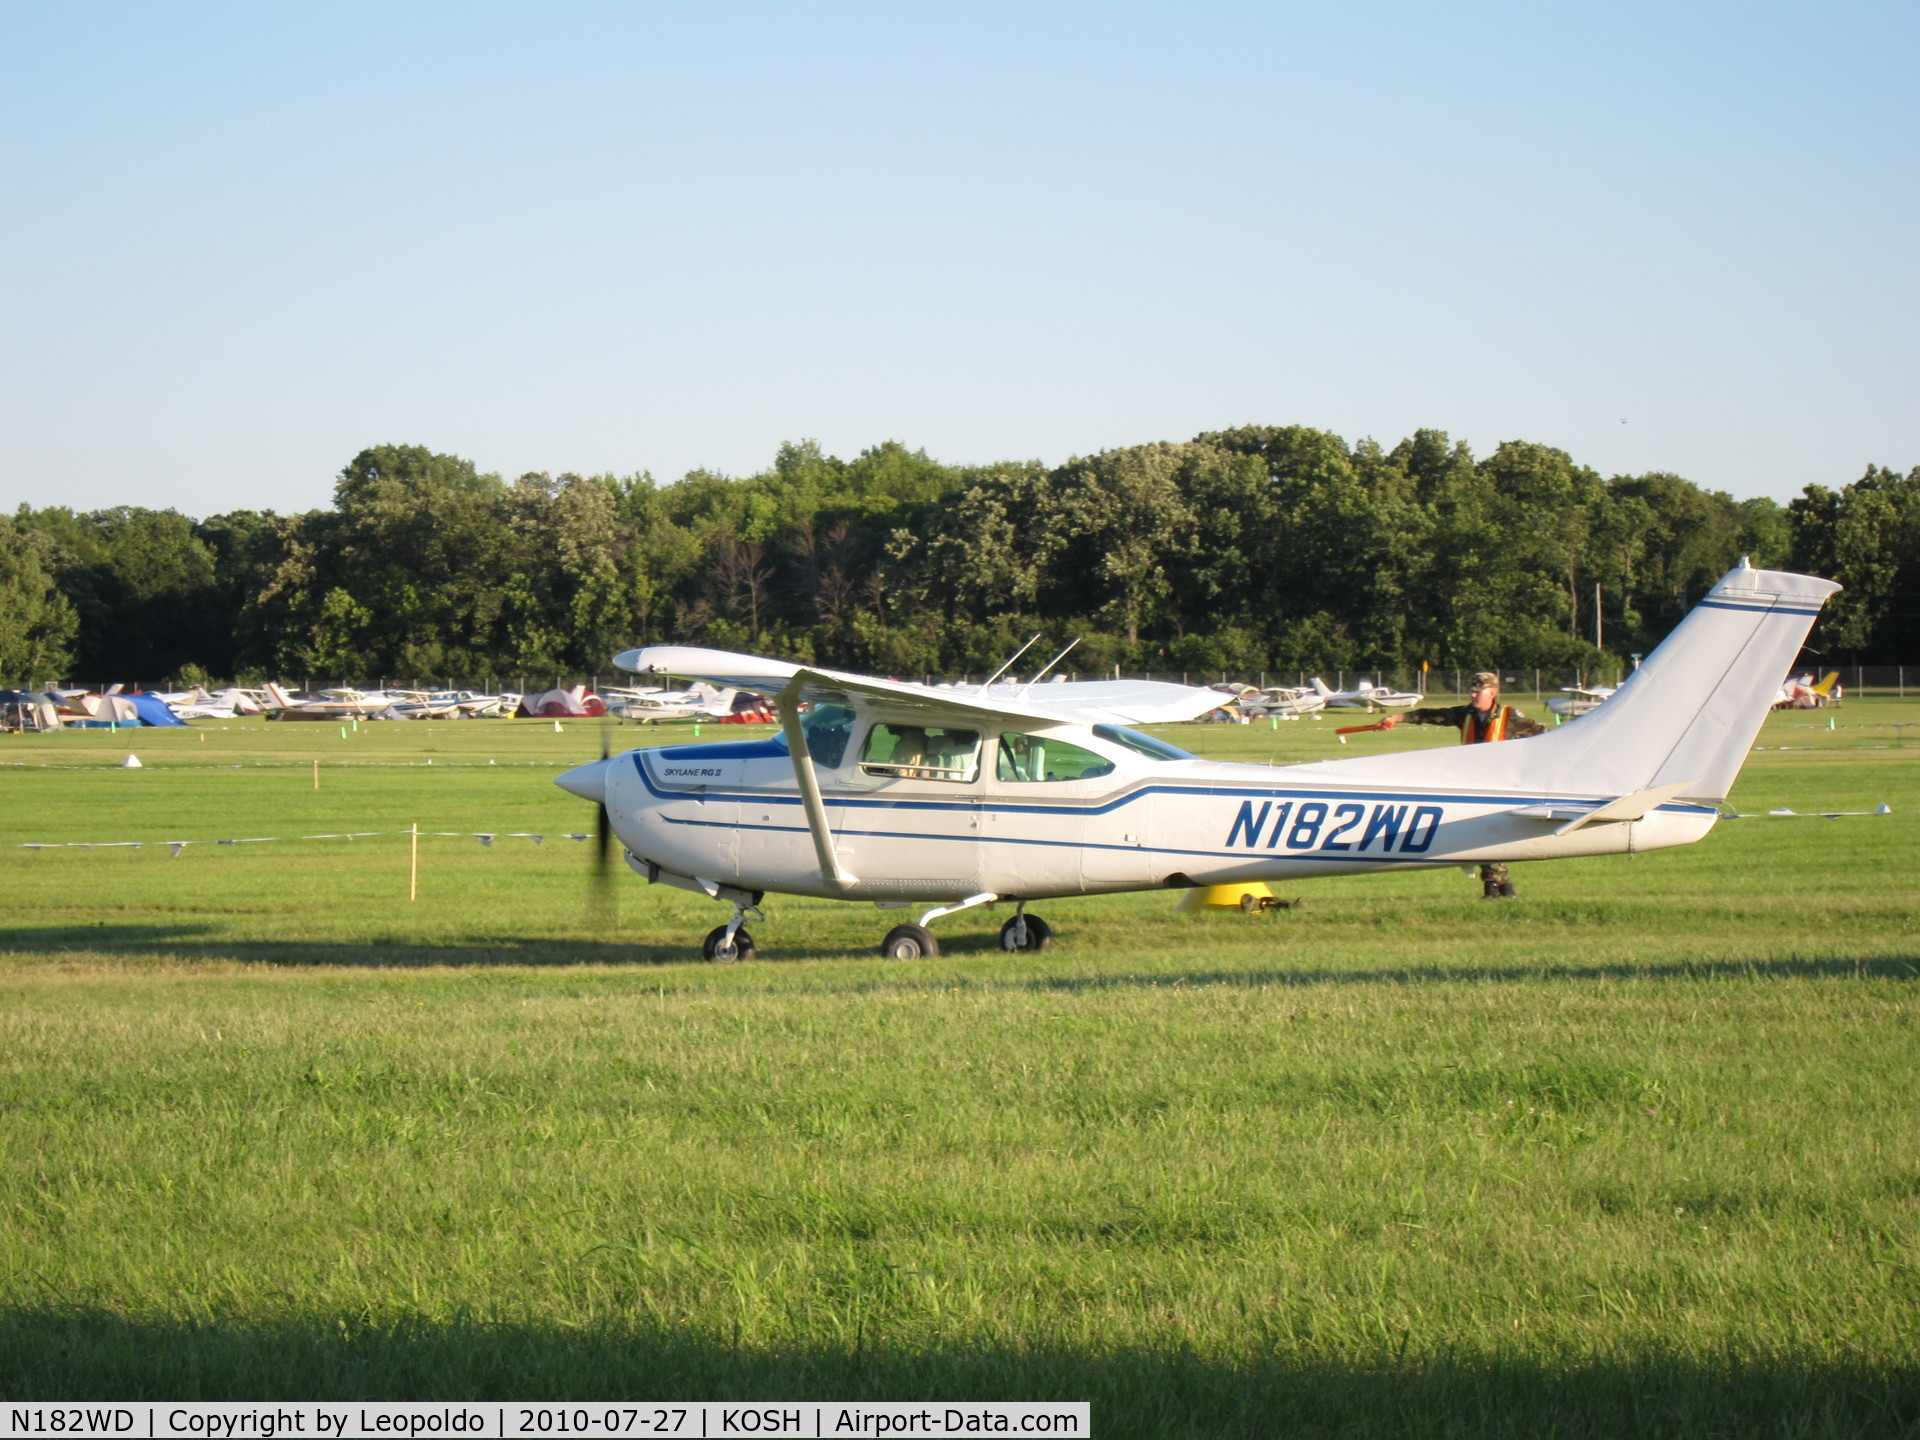 N182WD, 1979 Cessna TR182 Turbo Skylane RG C/N R18200848, oshkosh,wi
EAA Airventure 2010